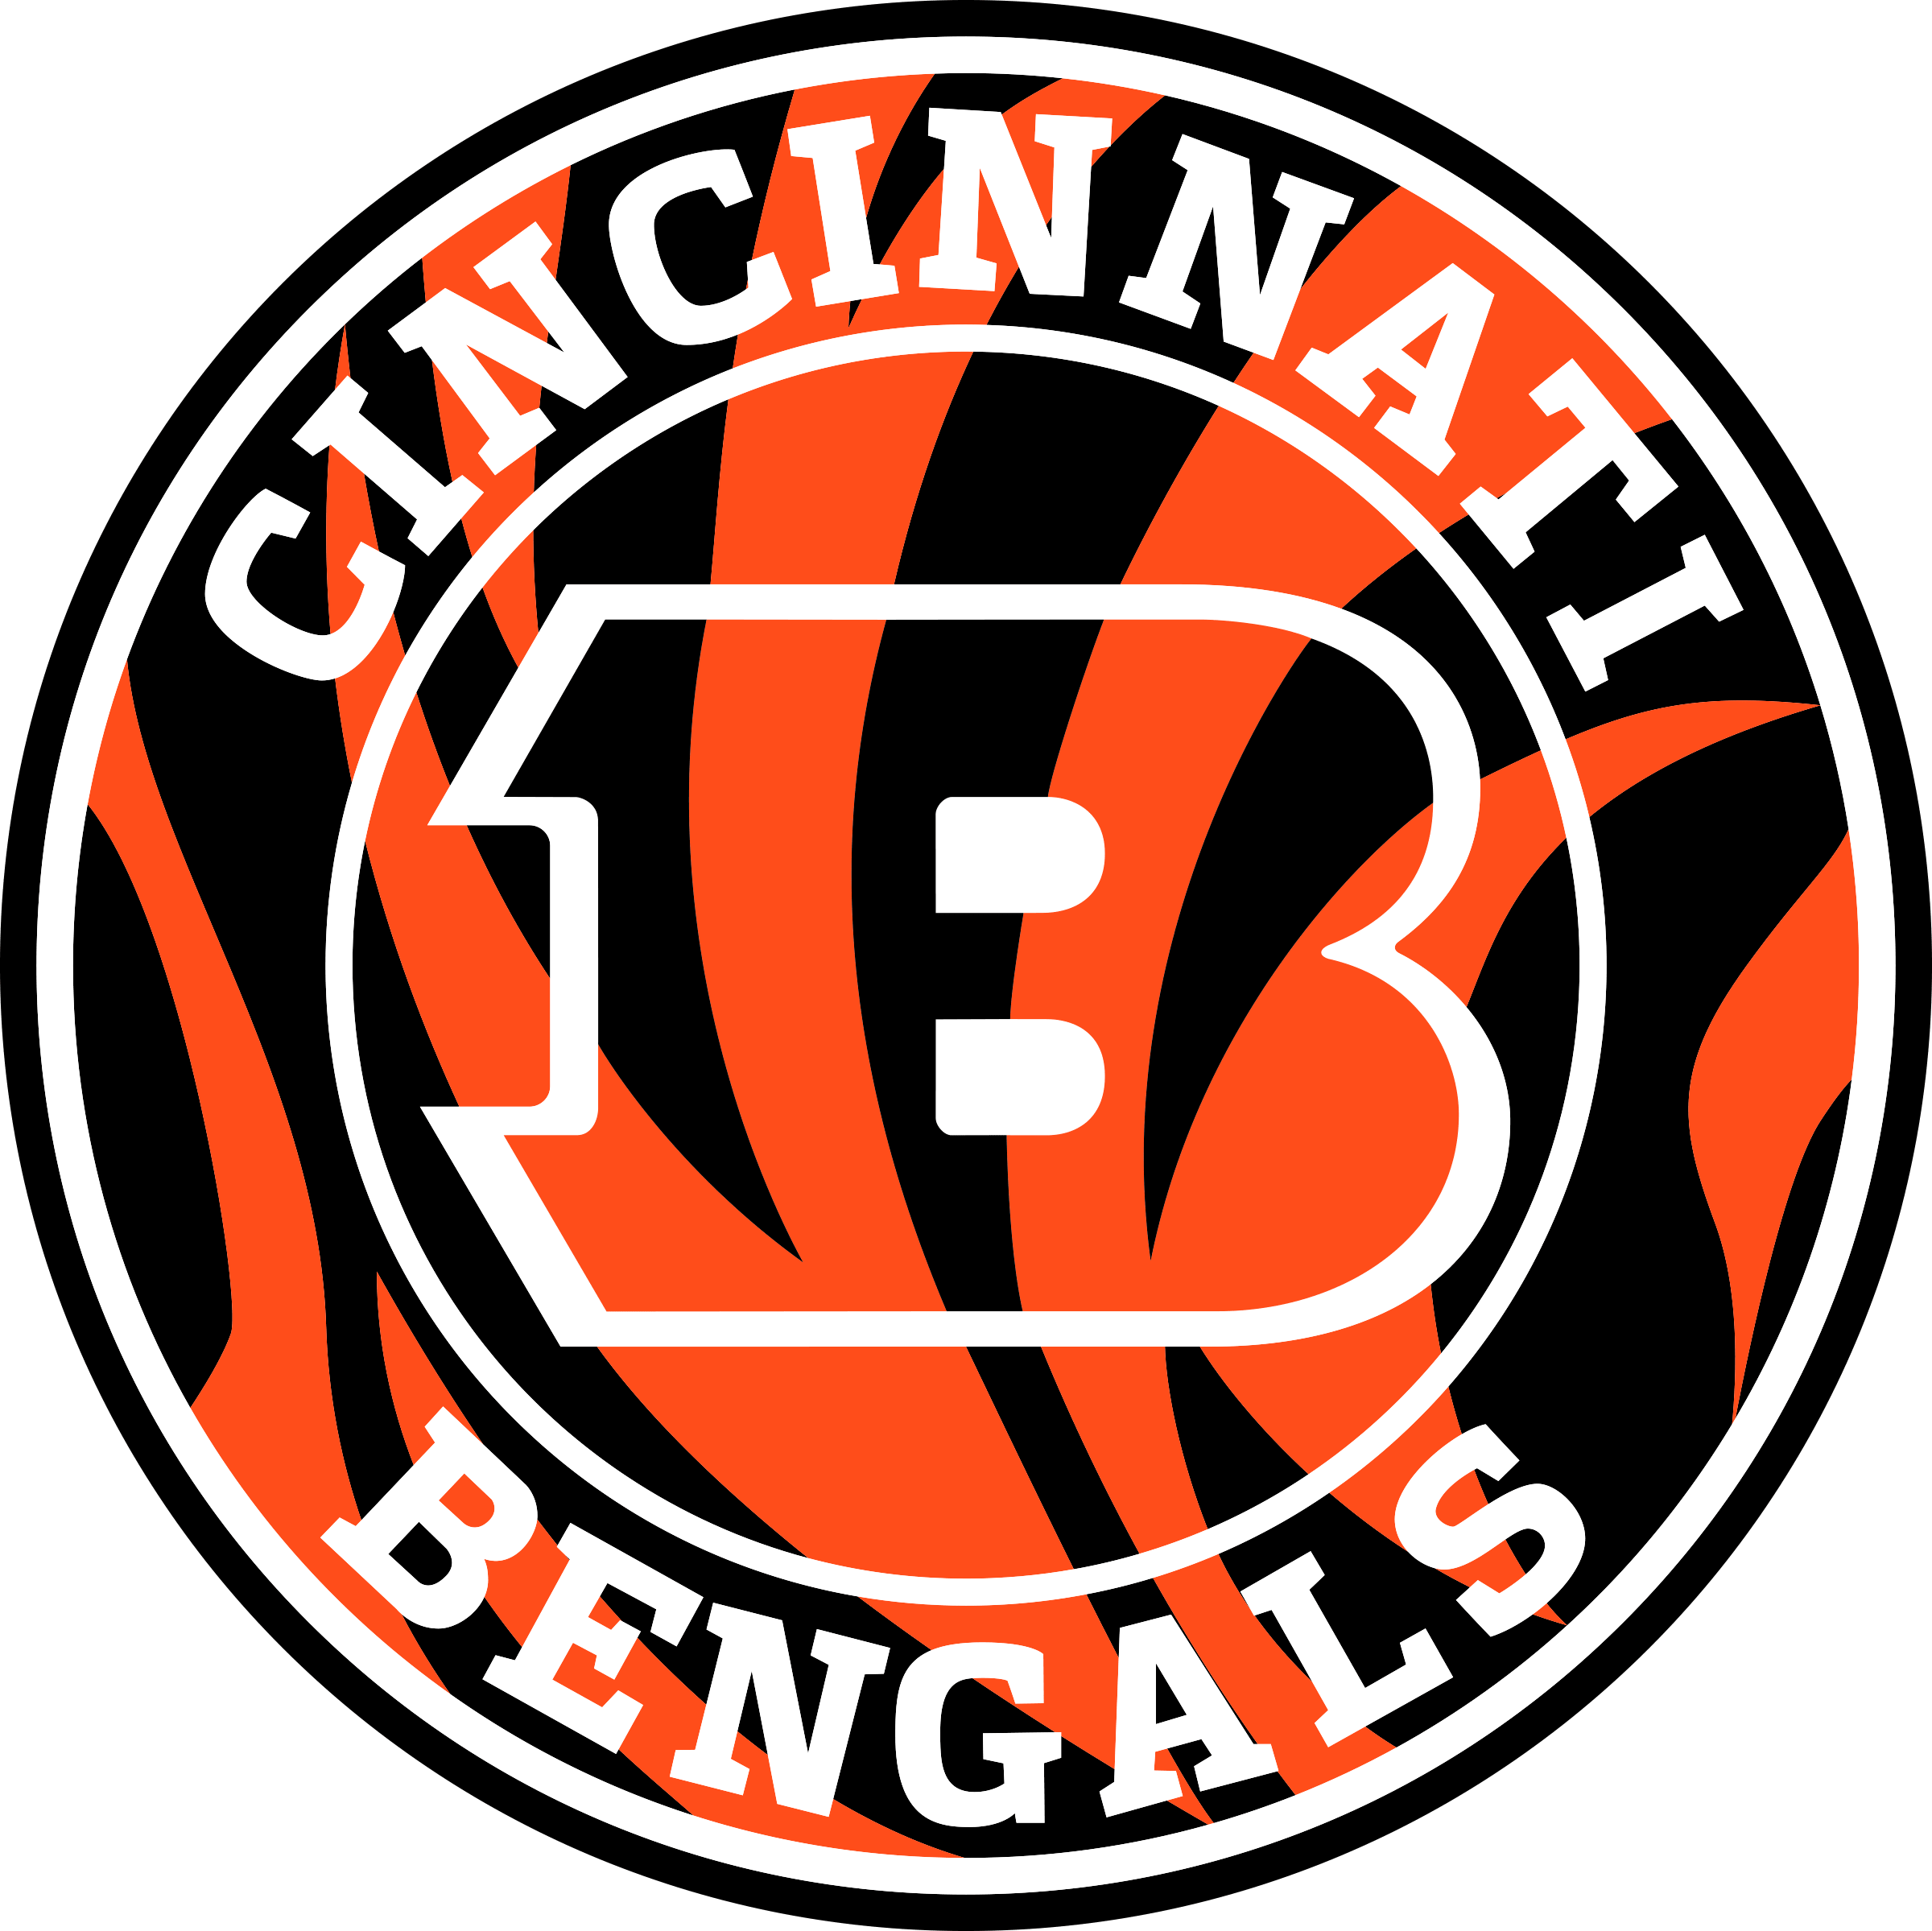 Printable Bengals Logo